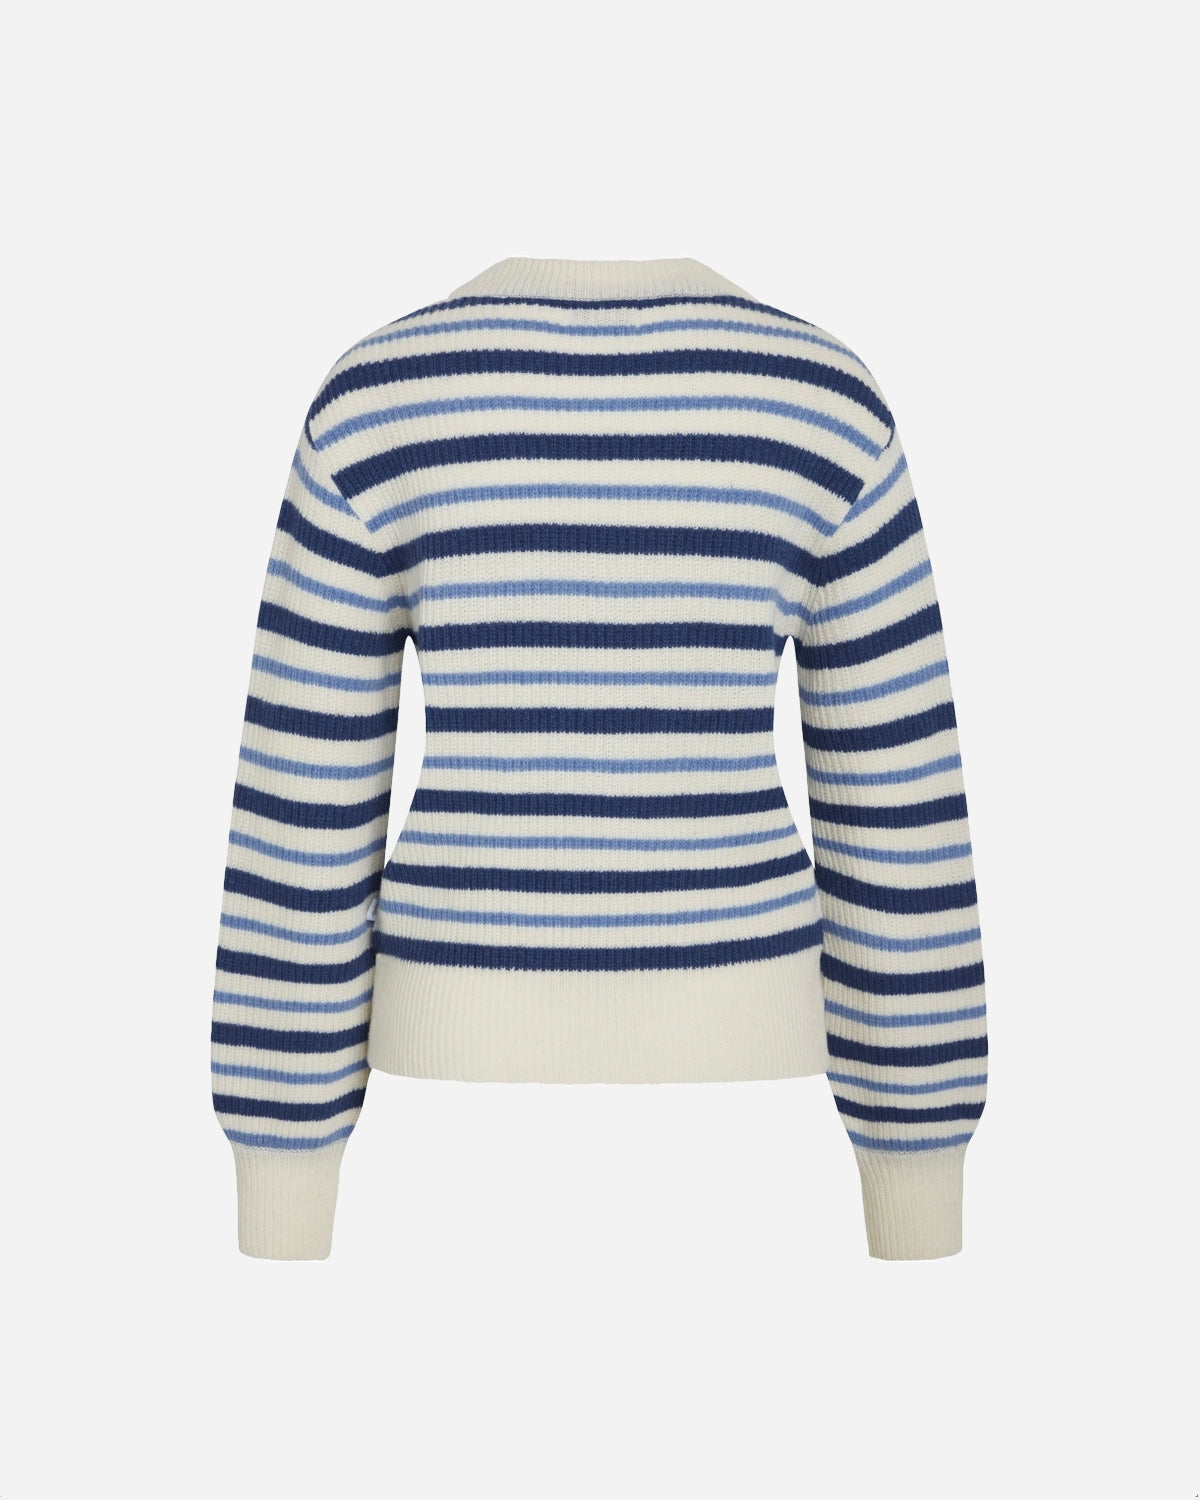 Melli knit - Ocean/cream/light blue